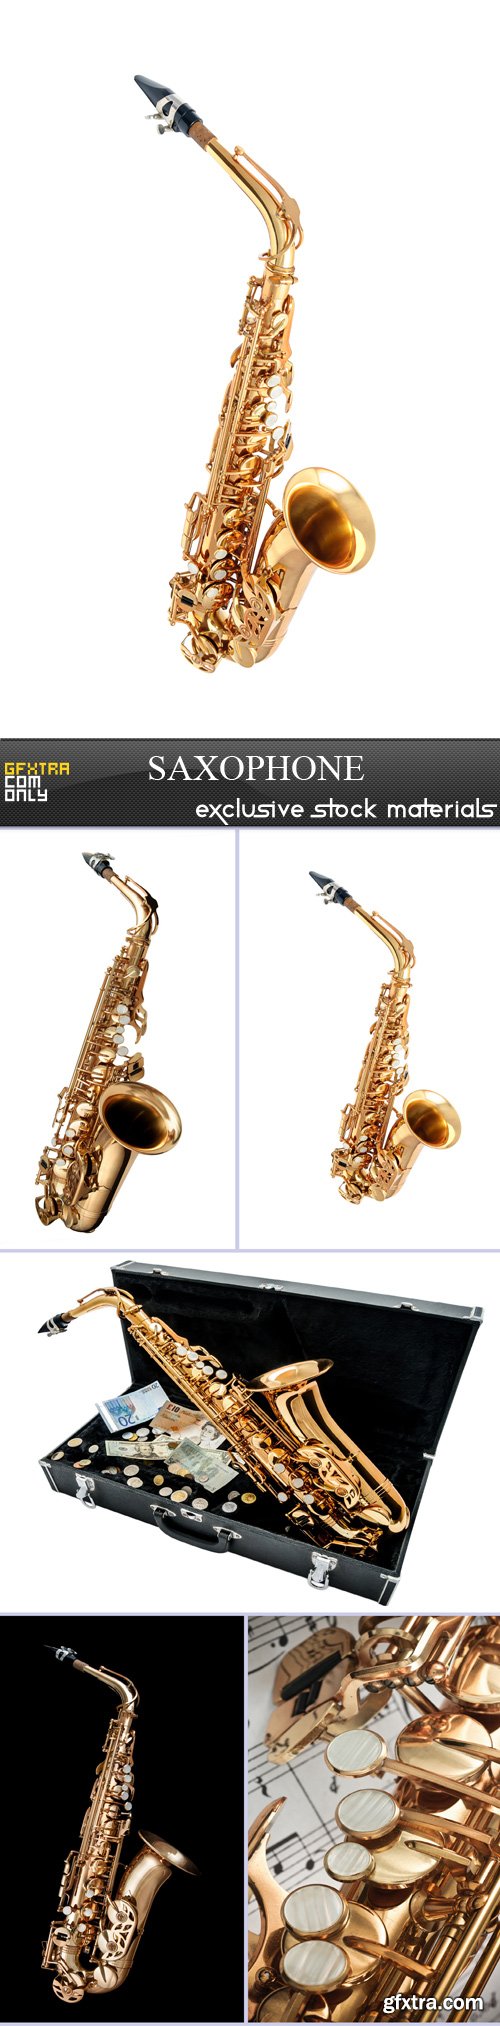 Saxophone 5xJPG